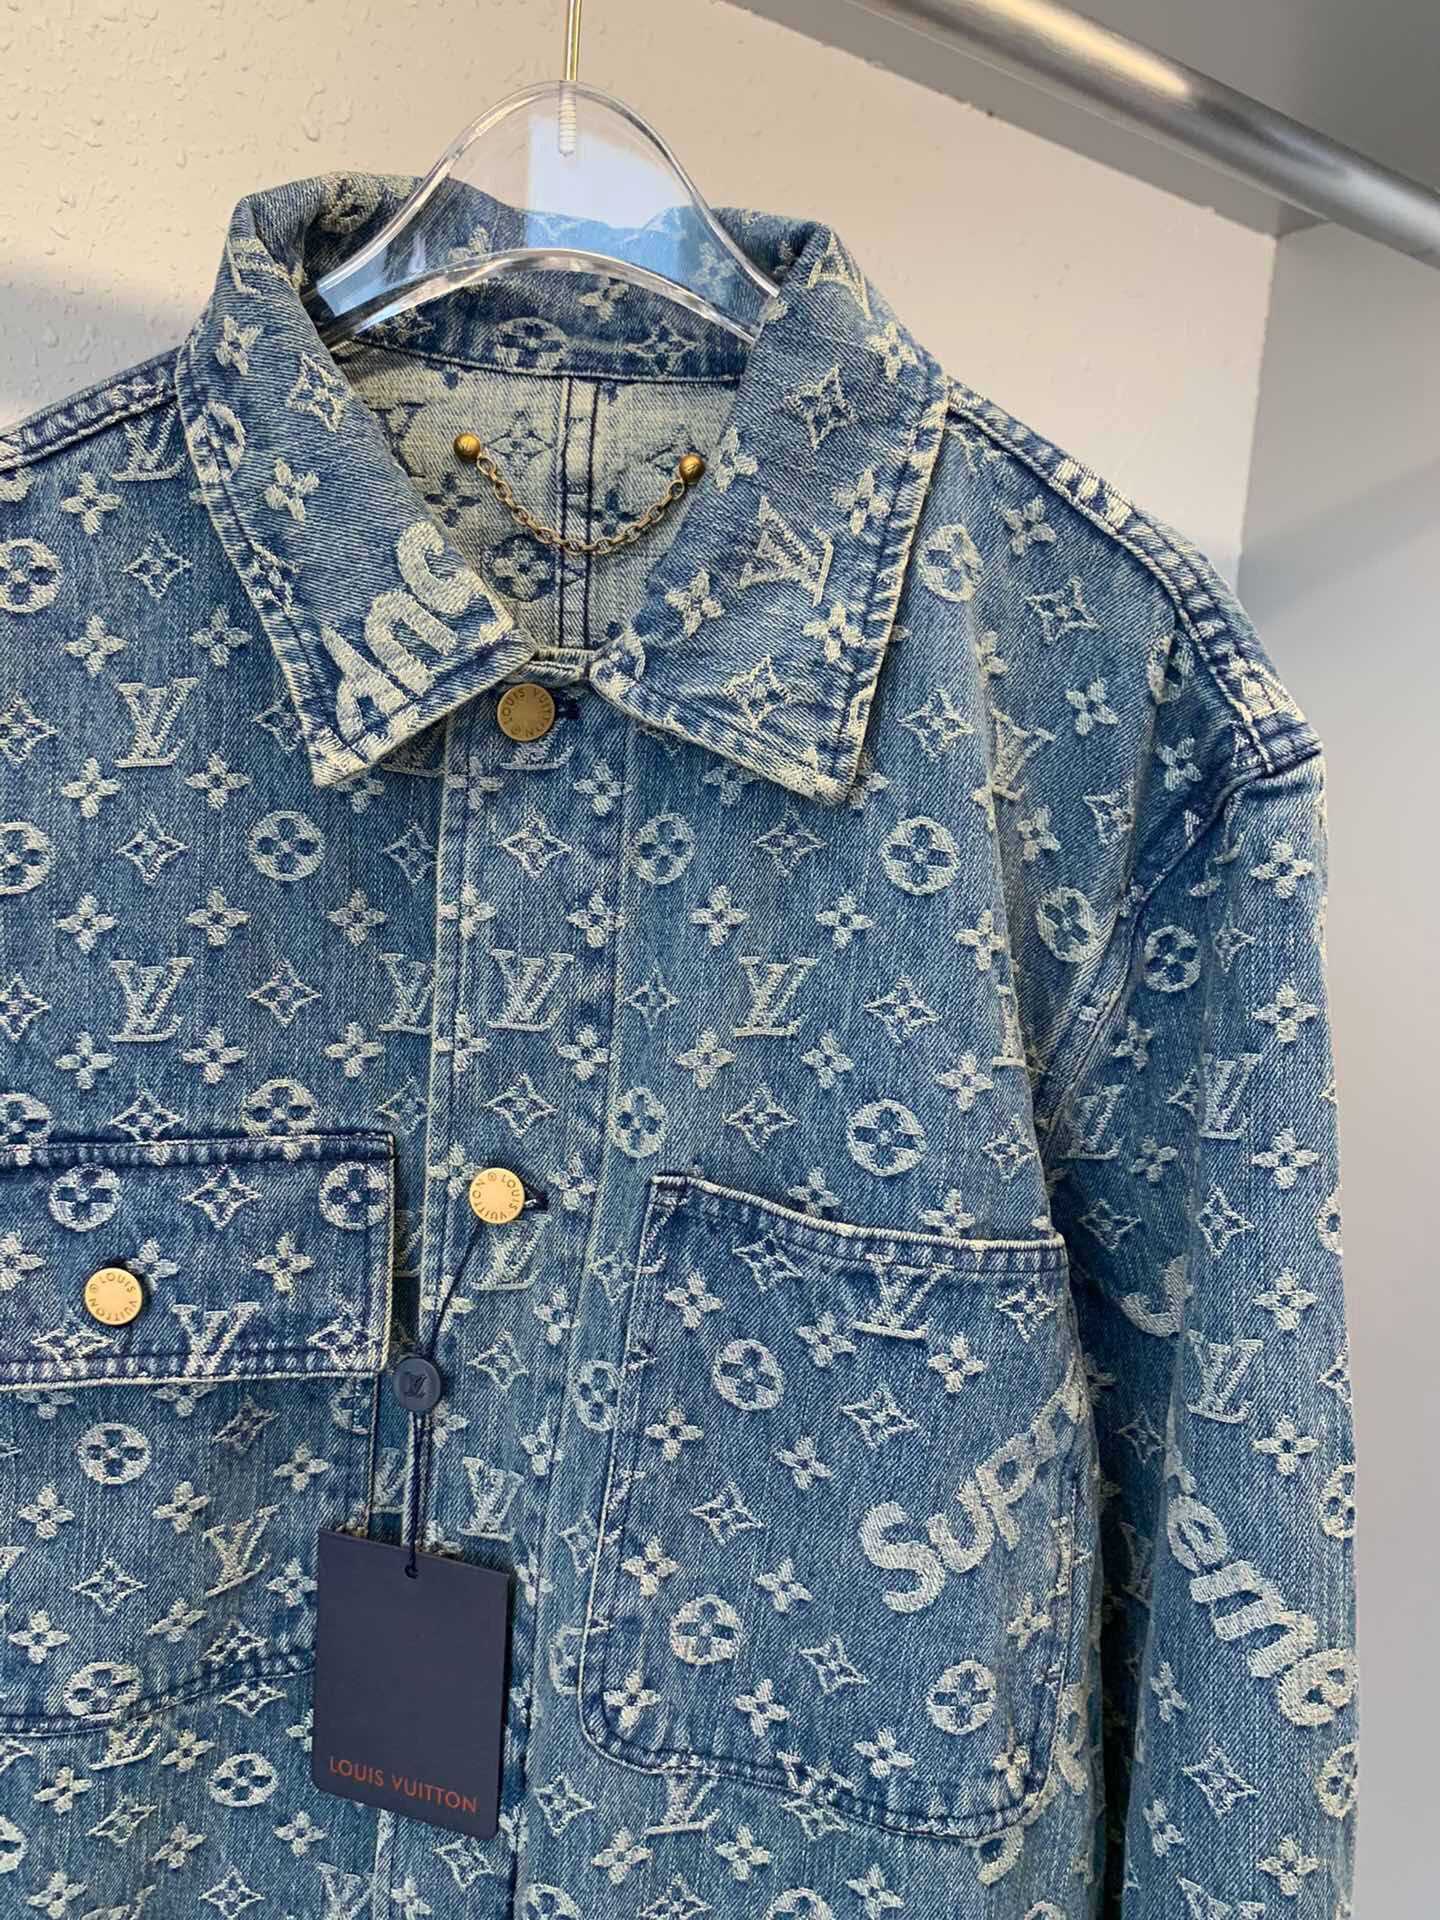 Louis Vuitton Jacket Jean Jackets For Men :: Keweenaw Bay Indian Community